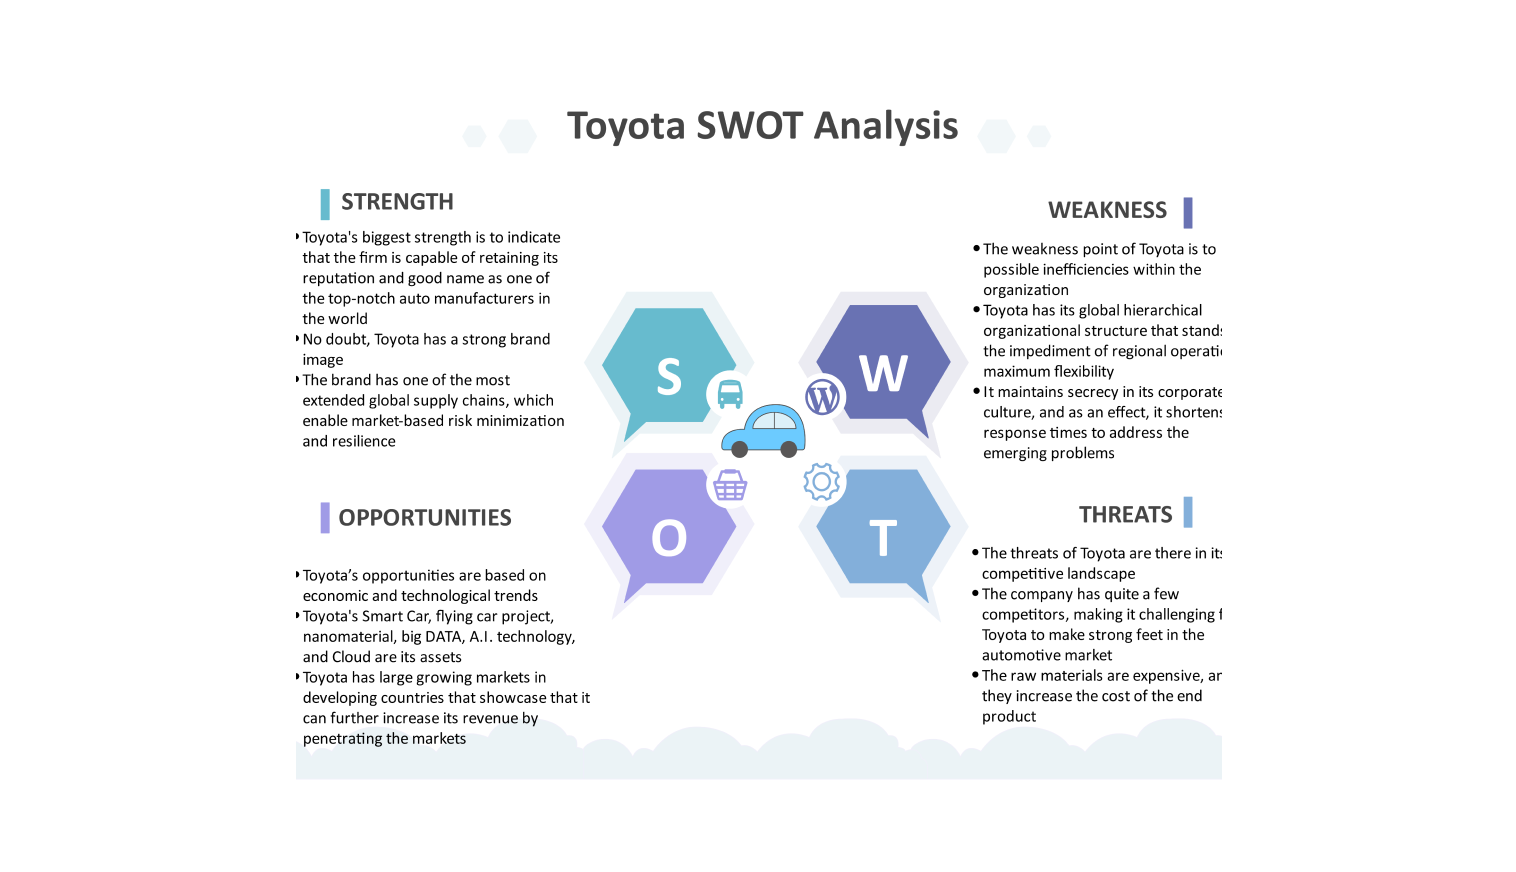 SWOT Analysis for toyota